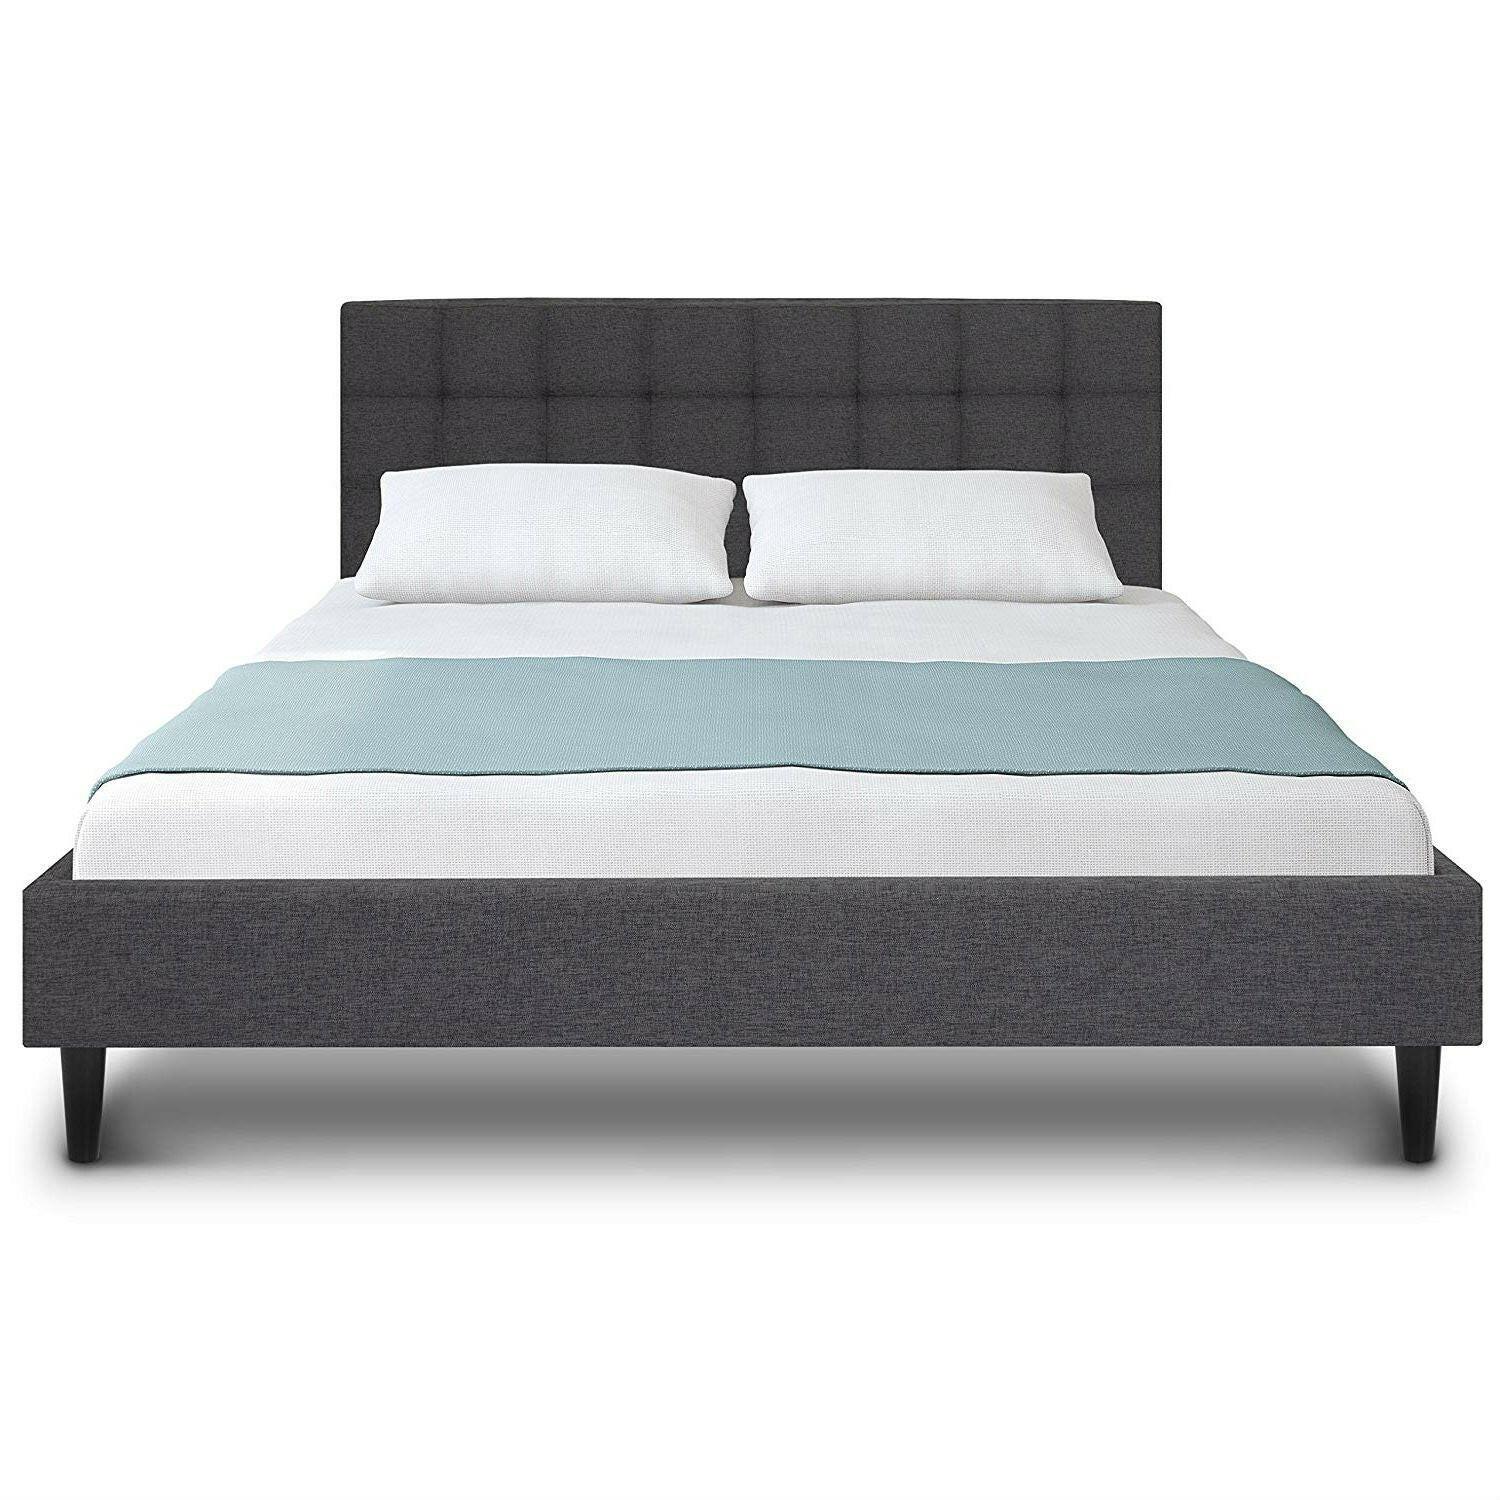 Full size Grey Mid-Century Modern Upholstered Platform Bed Frame with Headboard - FurniFindUSA